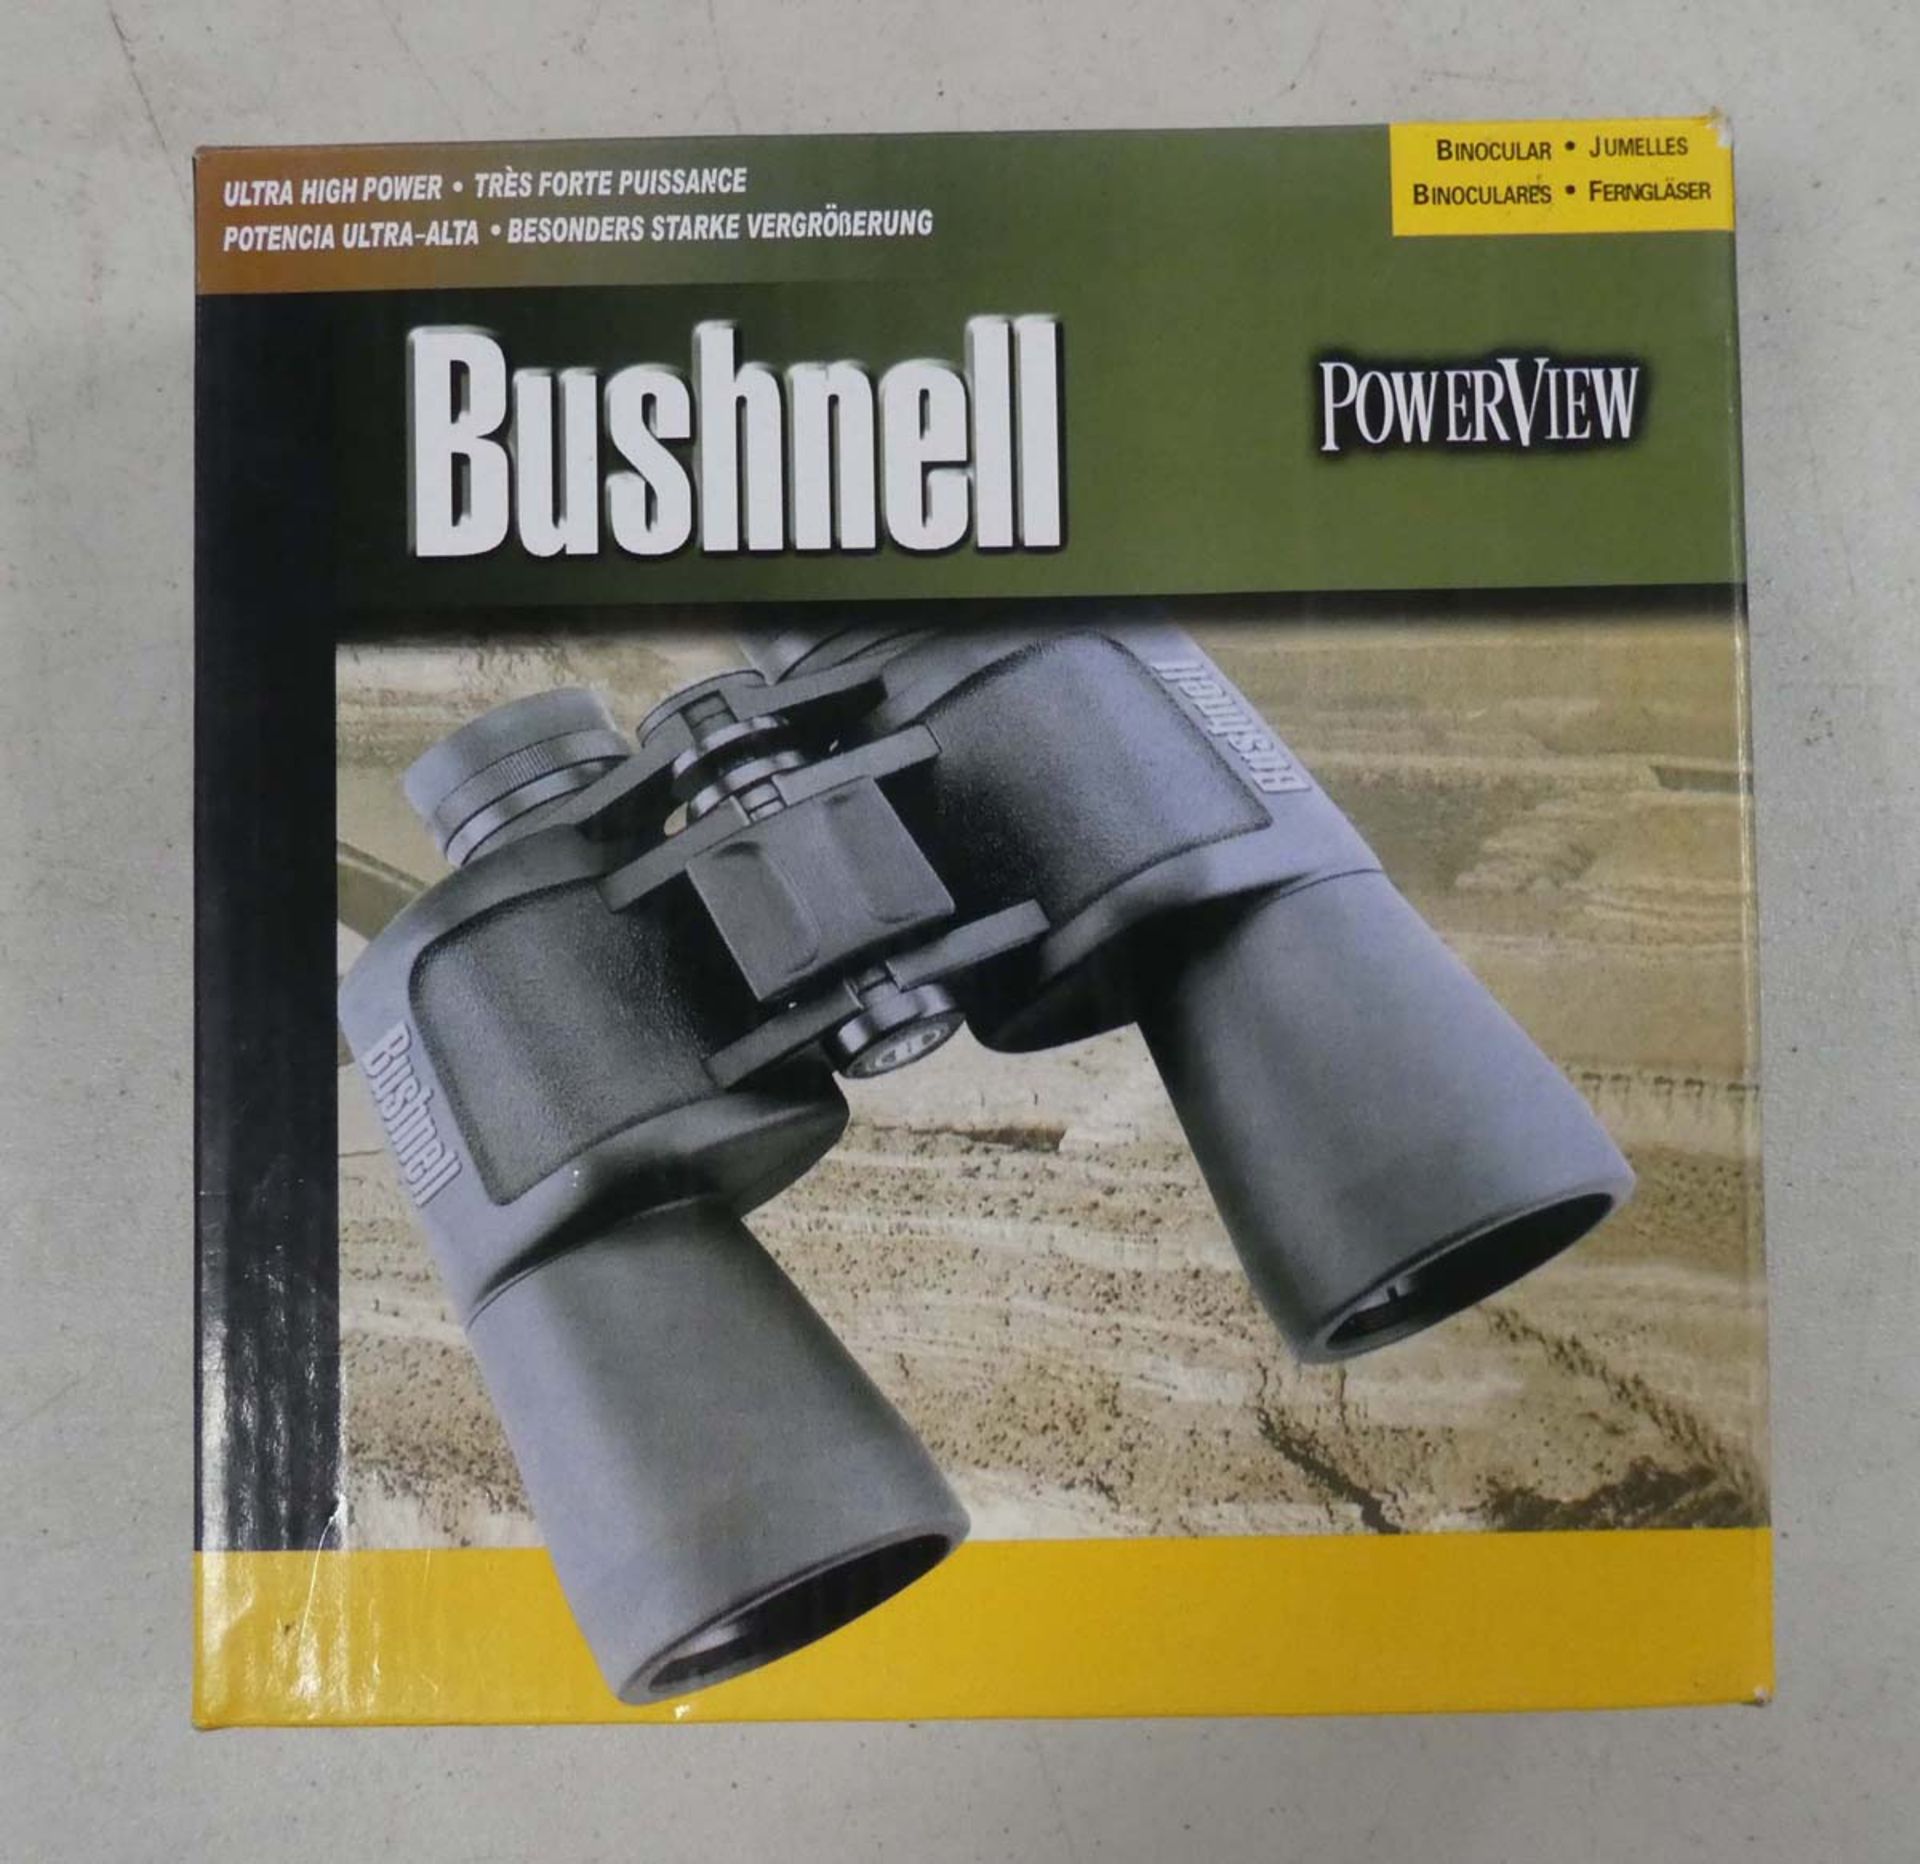 Pair of Bushnell binoculars in box